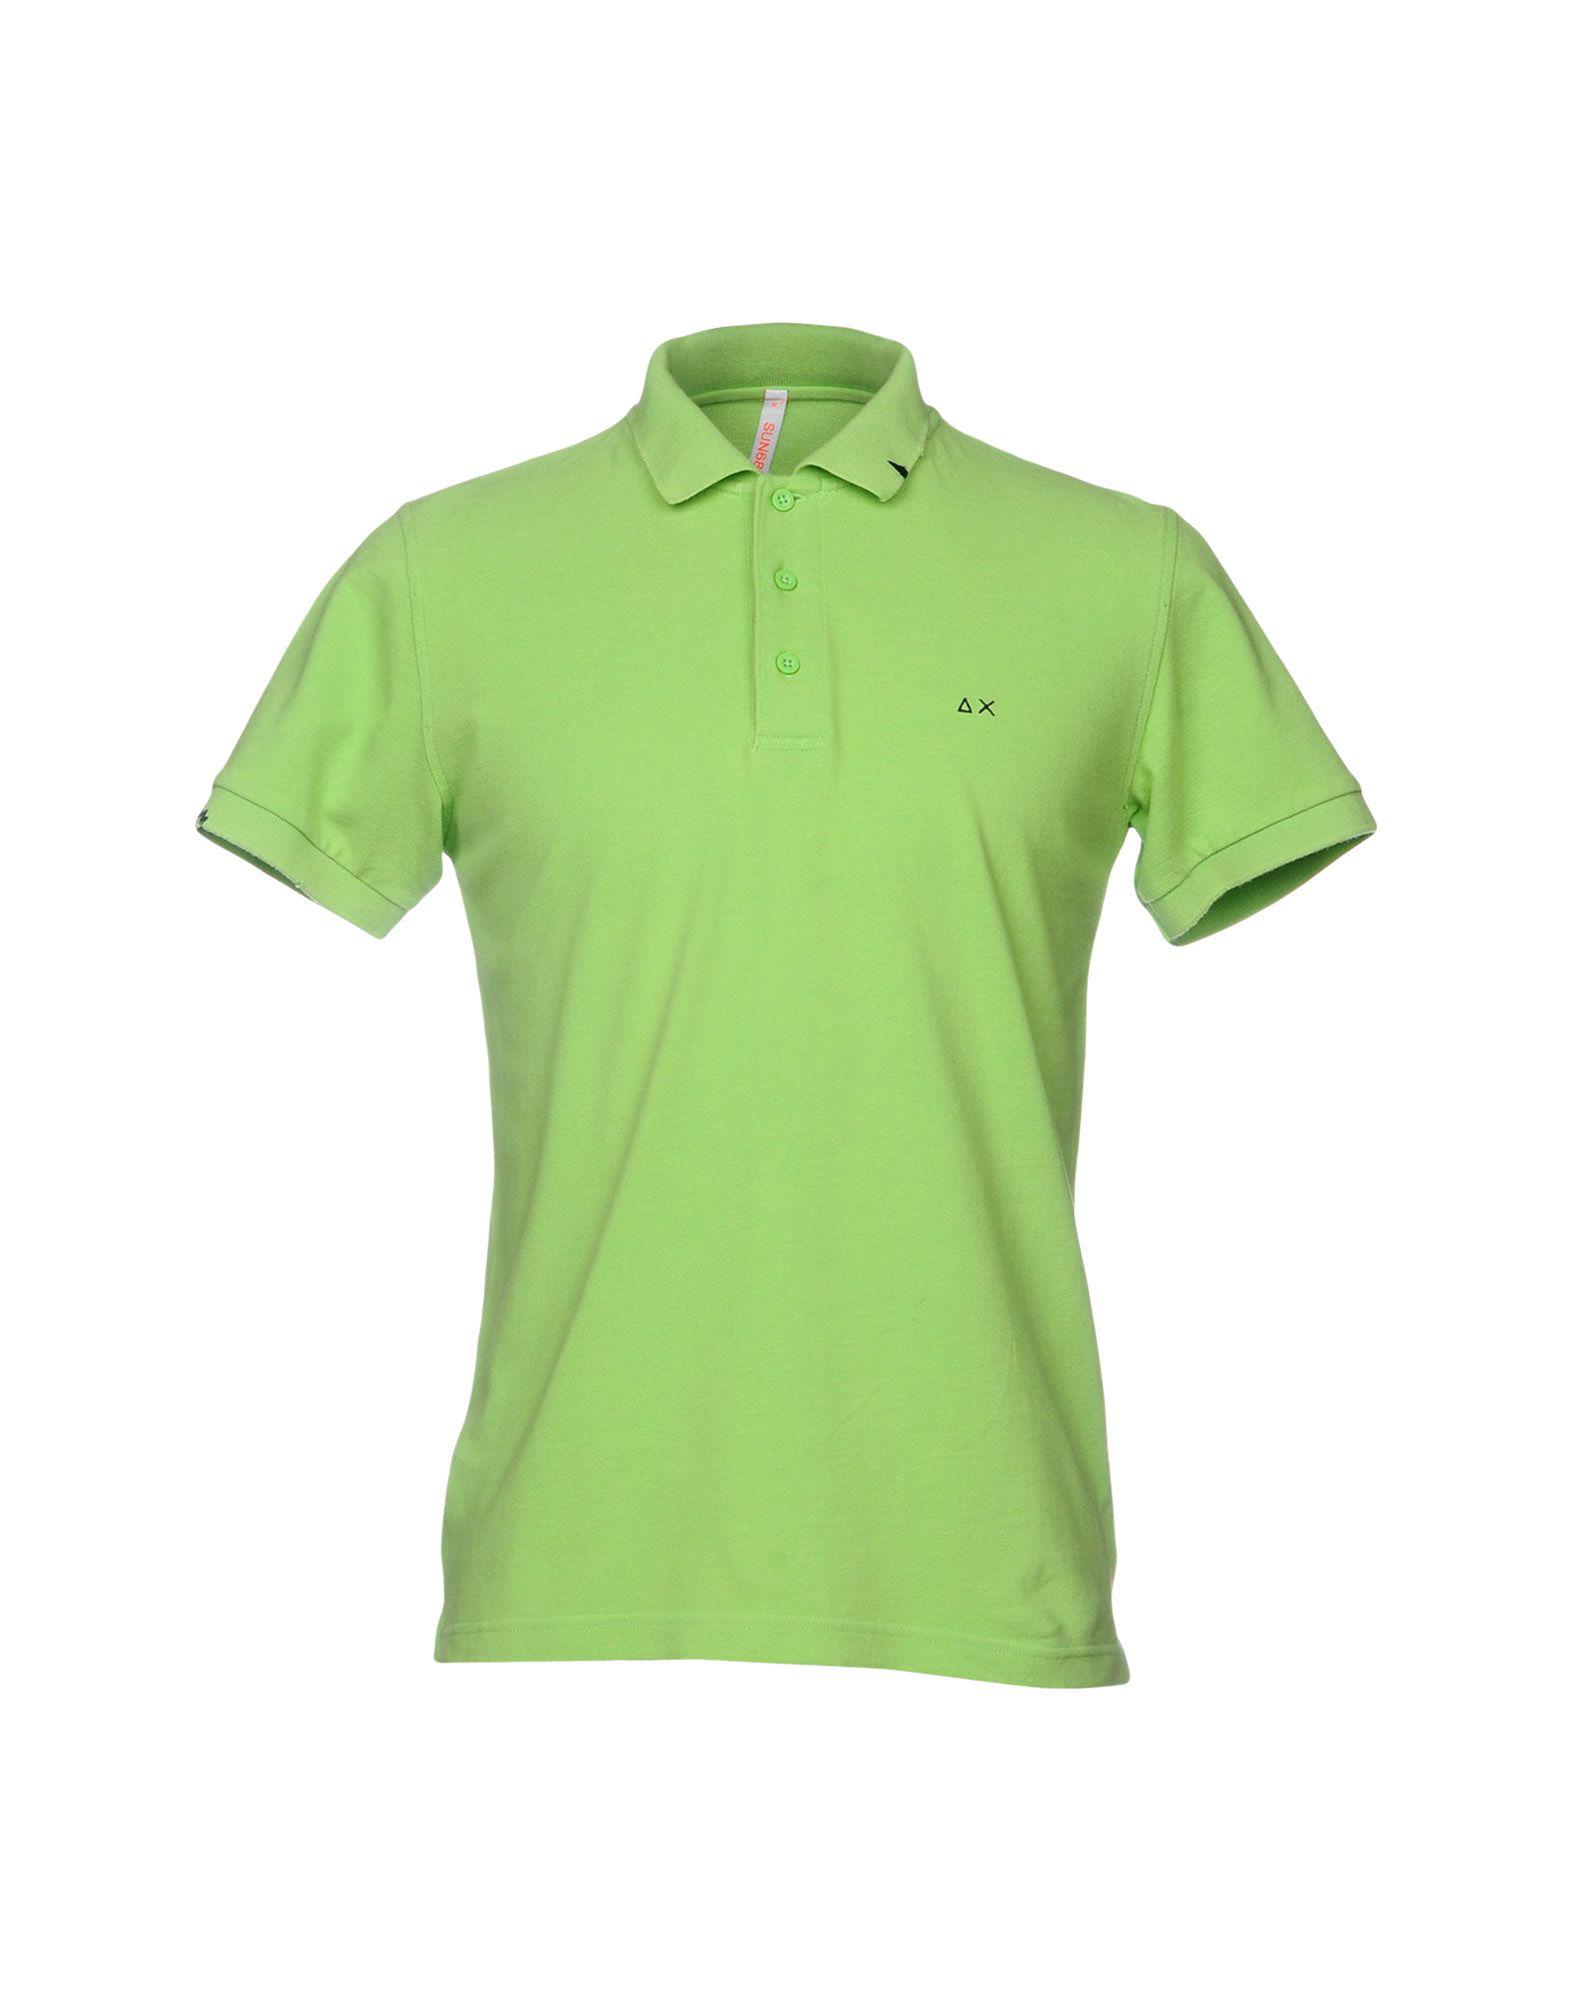 Sun 68 Cotton Polo Shirt in Light Green (Green) for Men - Lyst